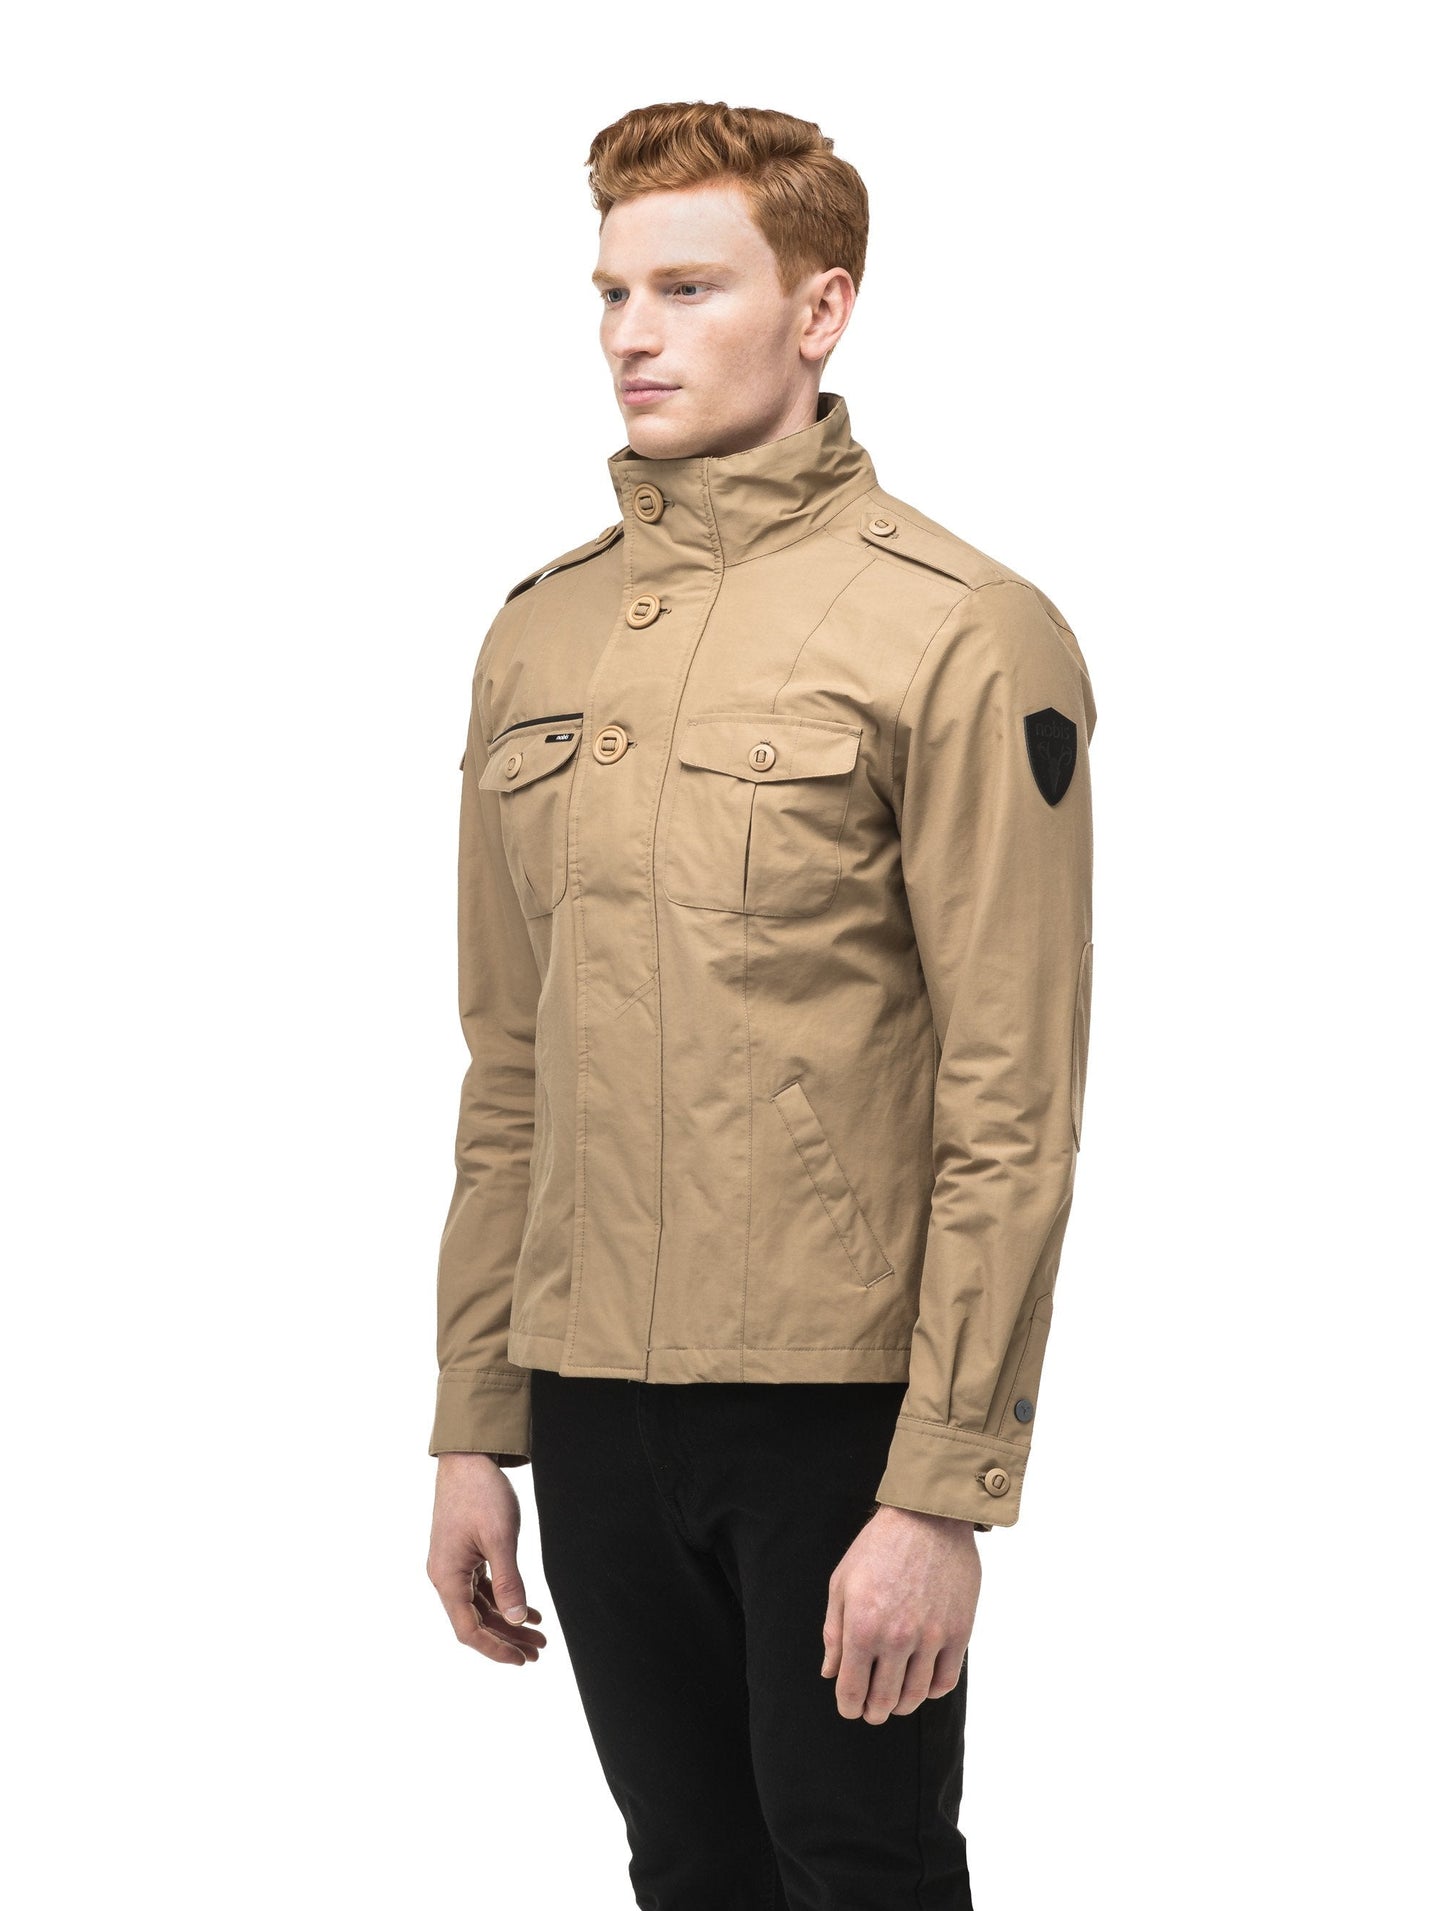 Men's waist length military style jacket in Cork